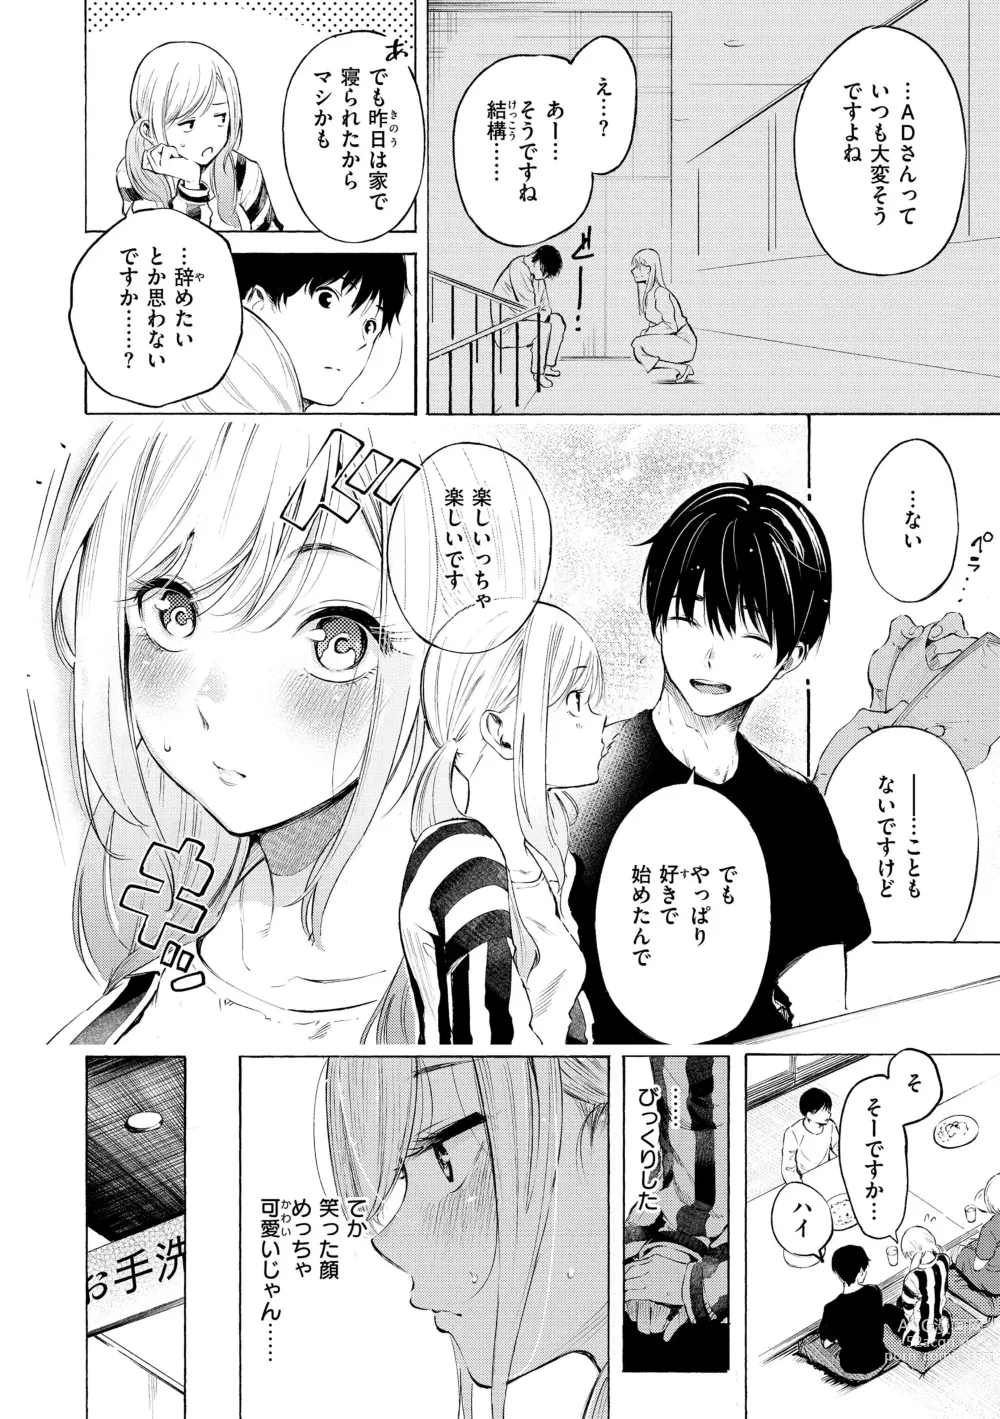 Page 10 of manga Frustration Girls - Mura Mura Girls ready for you!!